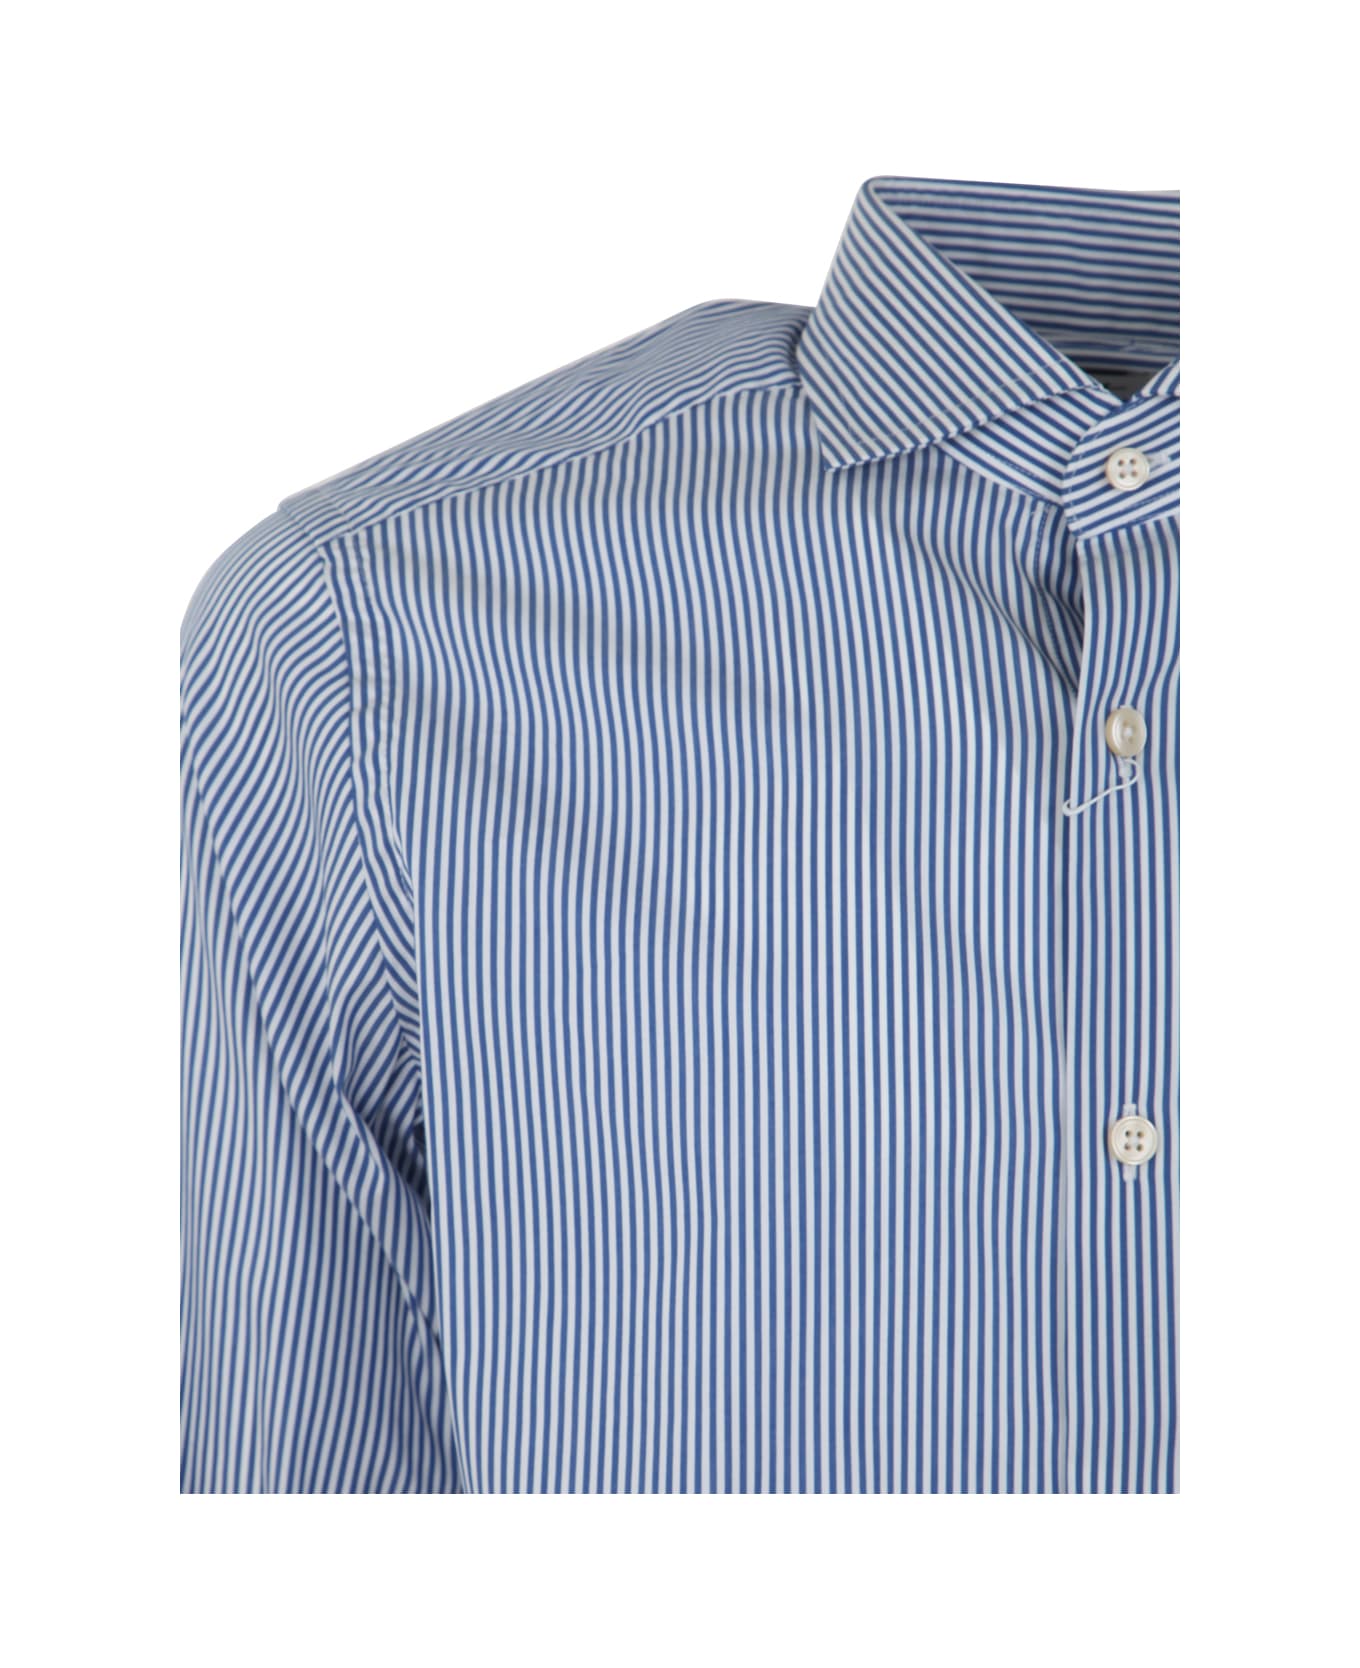 DNL Shirt - White Blue シャツ